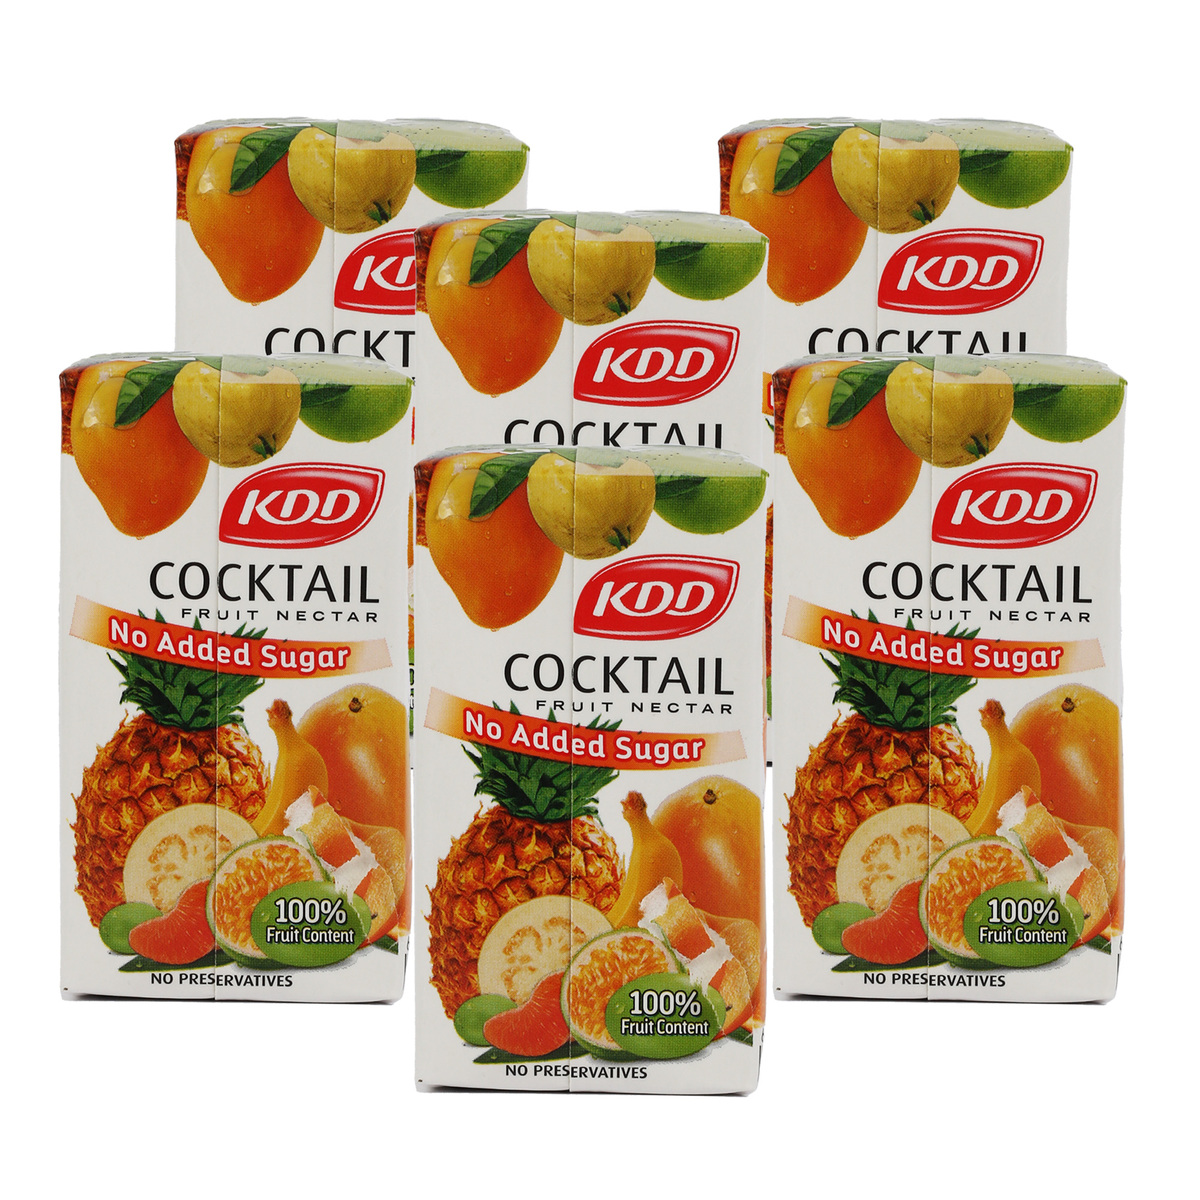 KDD Cocktail Fruit Nectar No Added Sugar 6 x 125ml